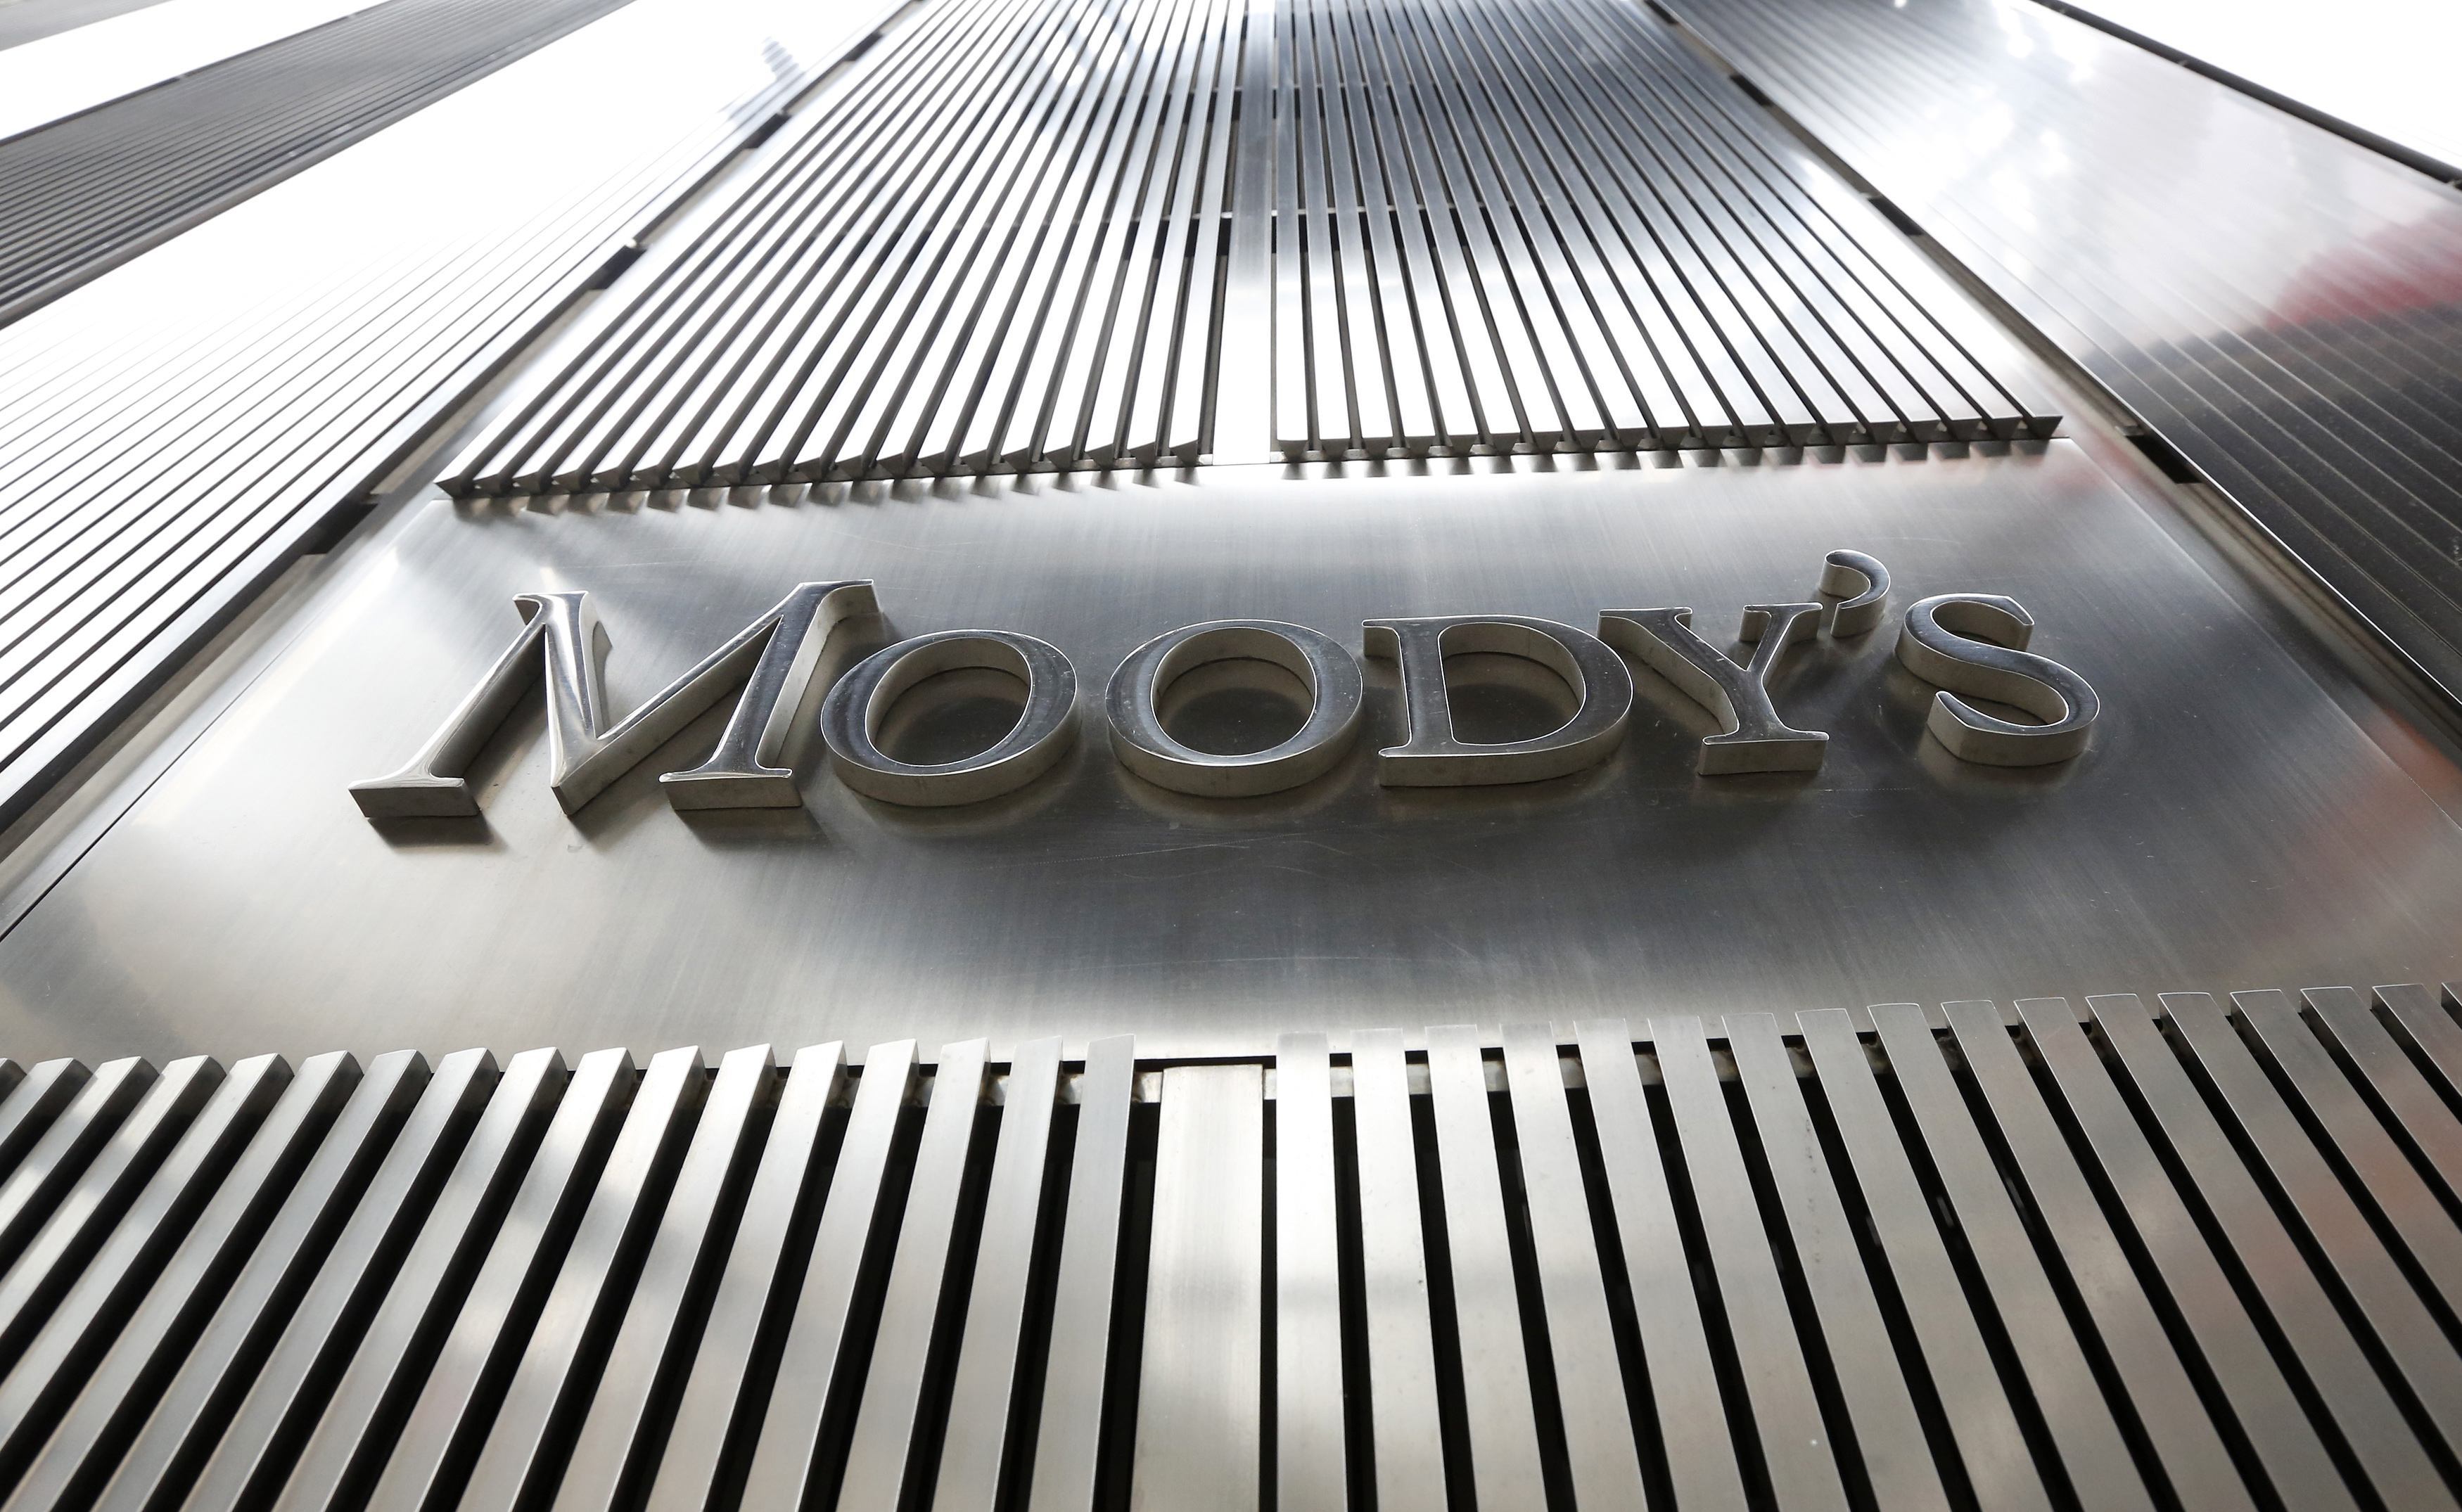 Moody’s: Υποβάθμισε 3 τραπεζικούς κολοσσούς των ΗΠΑ